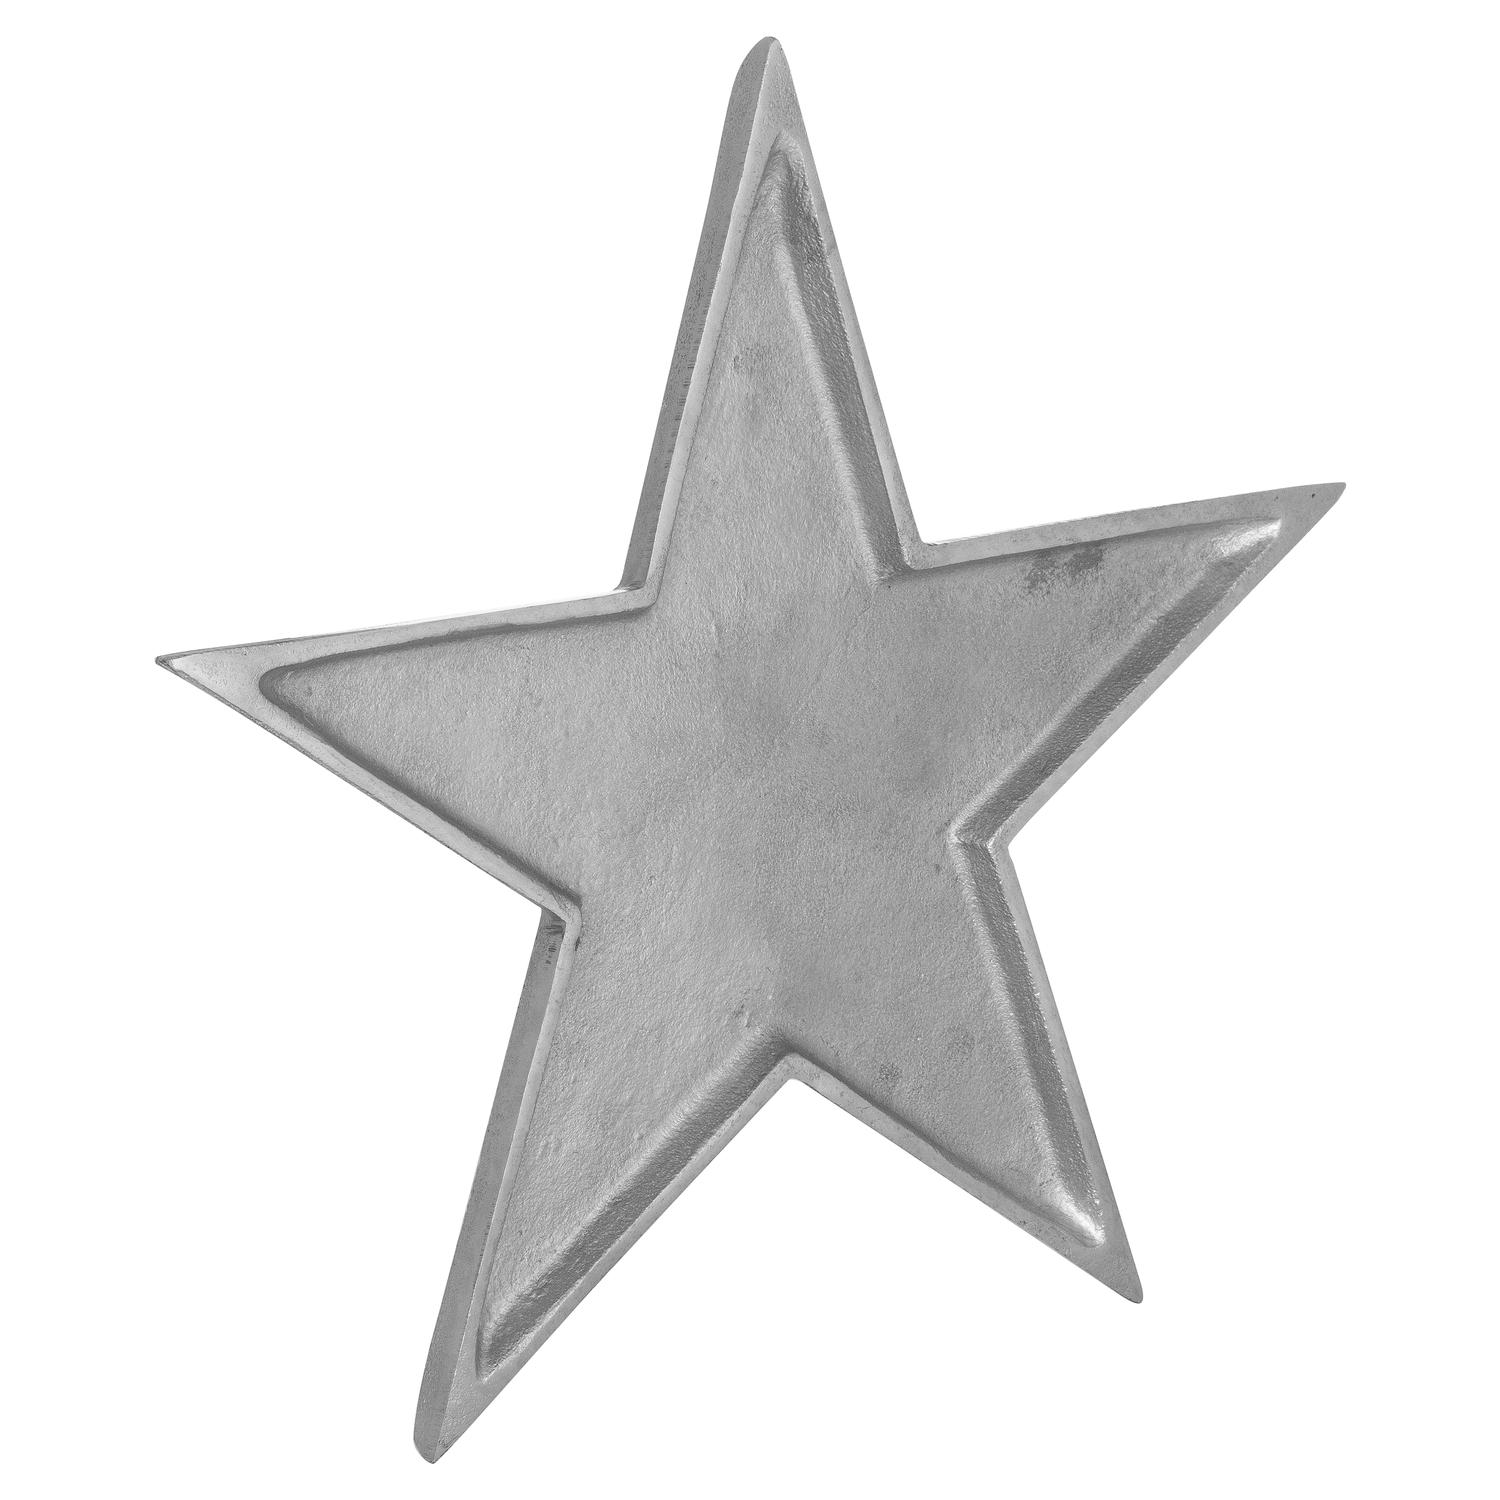 Cast Aluminium Large Star Dish - Image 1